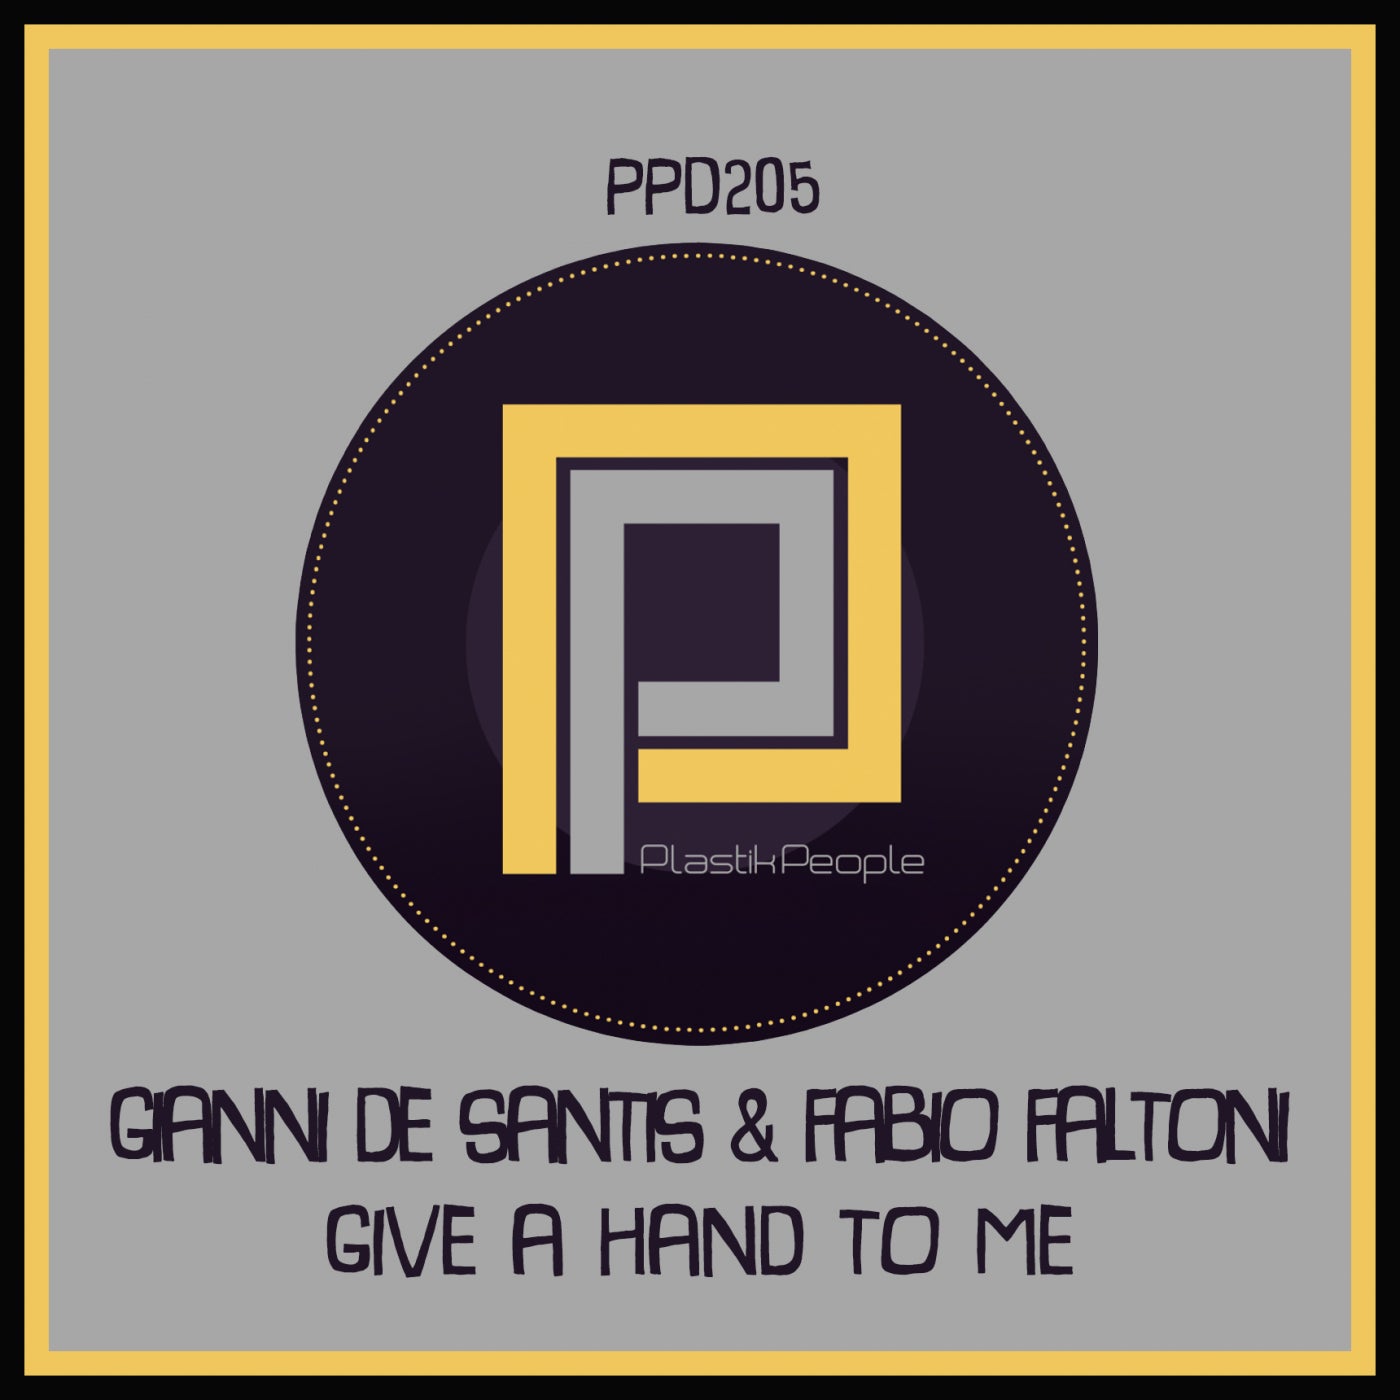 Gianni De Santis. Fabio Faltoni - Give A Hand To Me [PPD205]